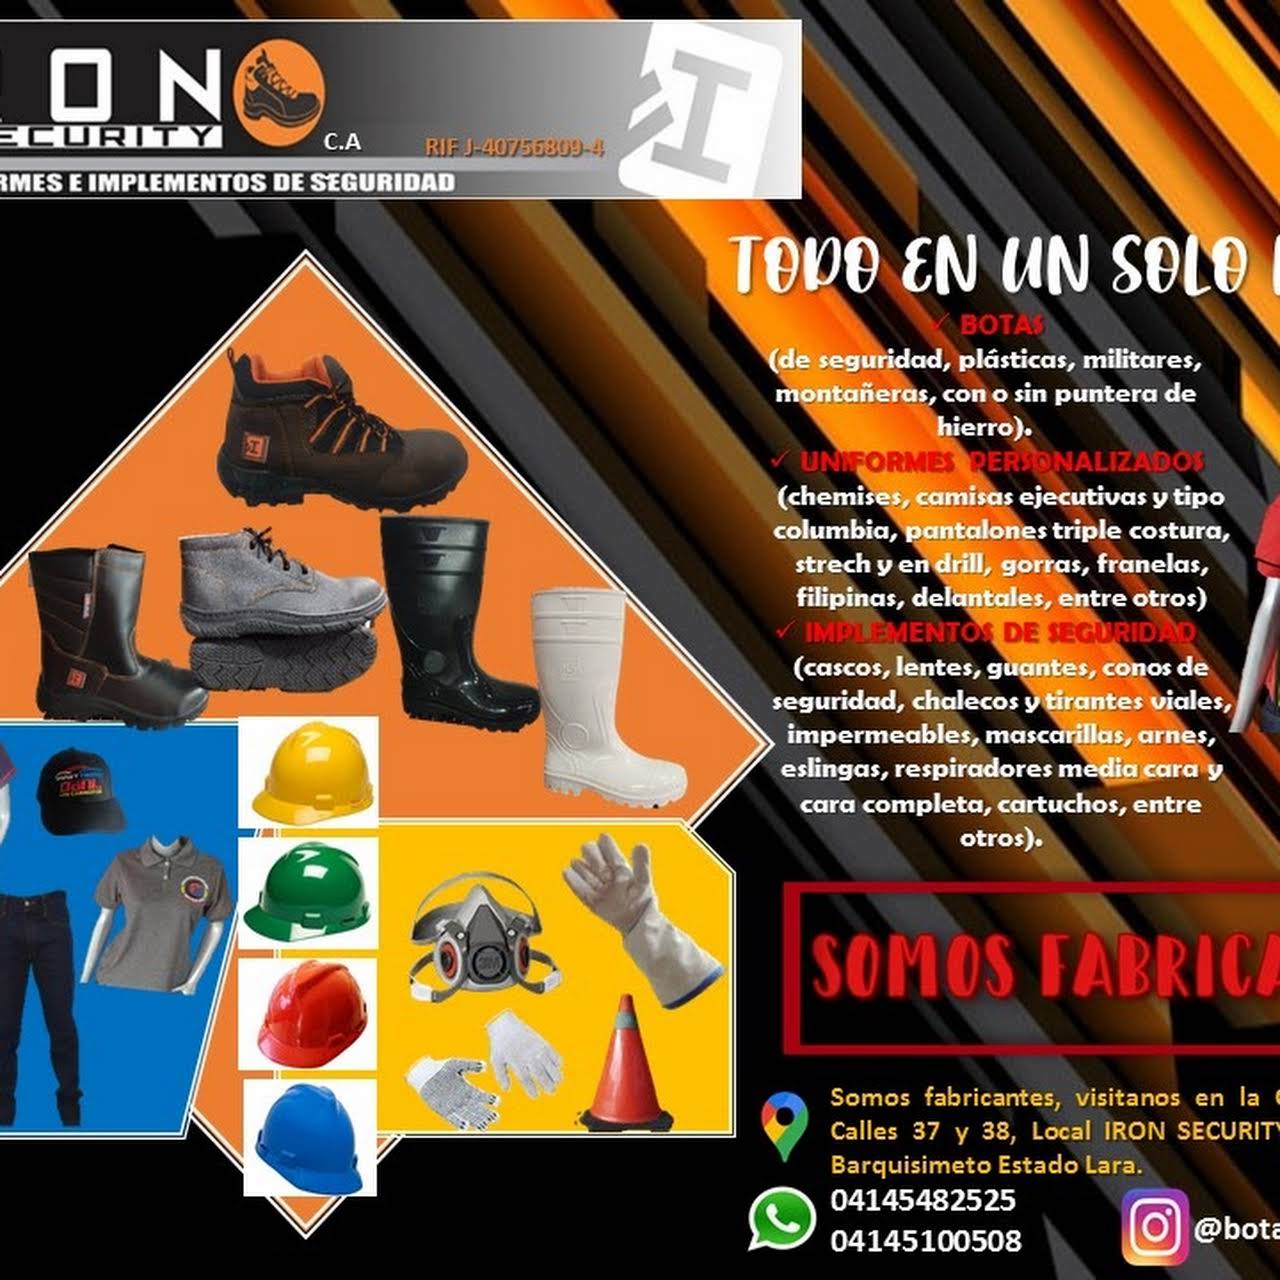 IRON SECURITY C.A.- Botas, Uniformes e Implementos de Seguridad Industrial Fábrica de Botas de en Barquisimeto